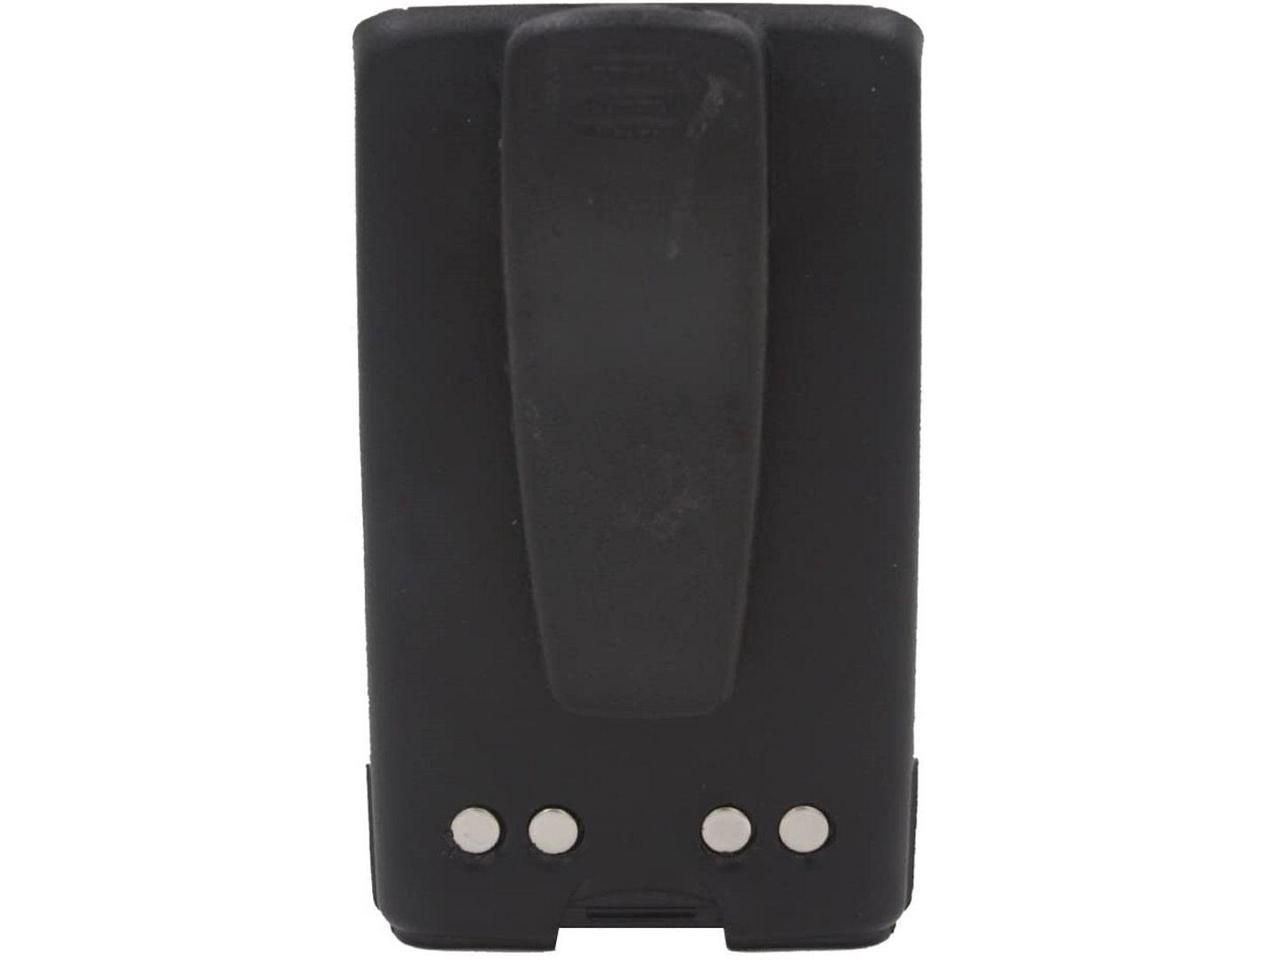 1500mAh Ni-MH Battery Pack+Belt Clip for Motorola Mag One BPR40 A8 Radio US